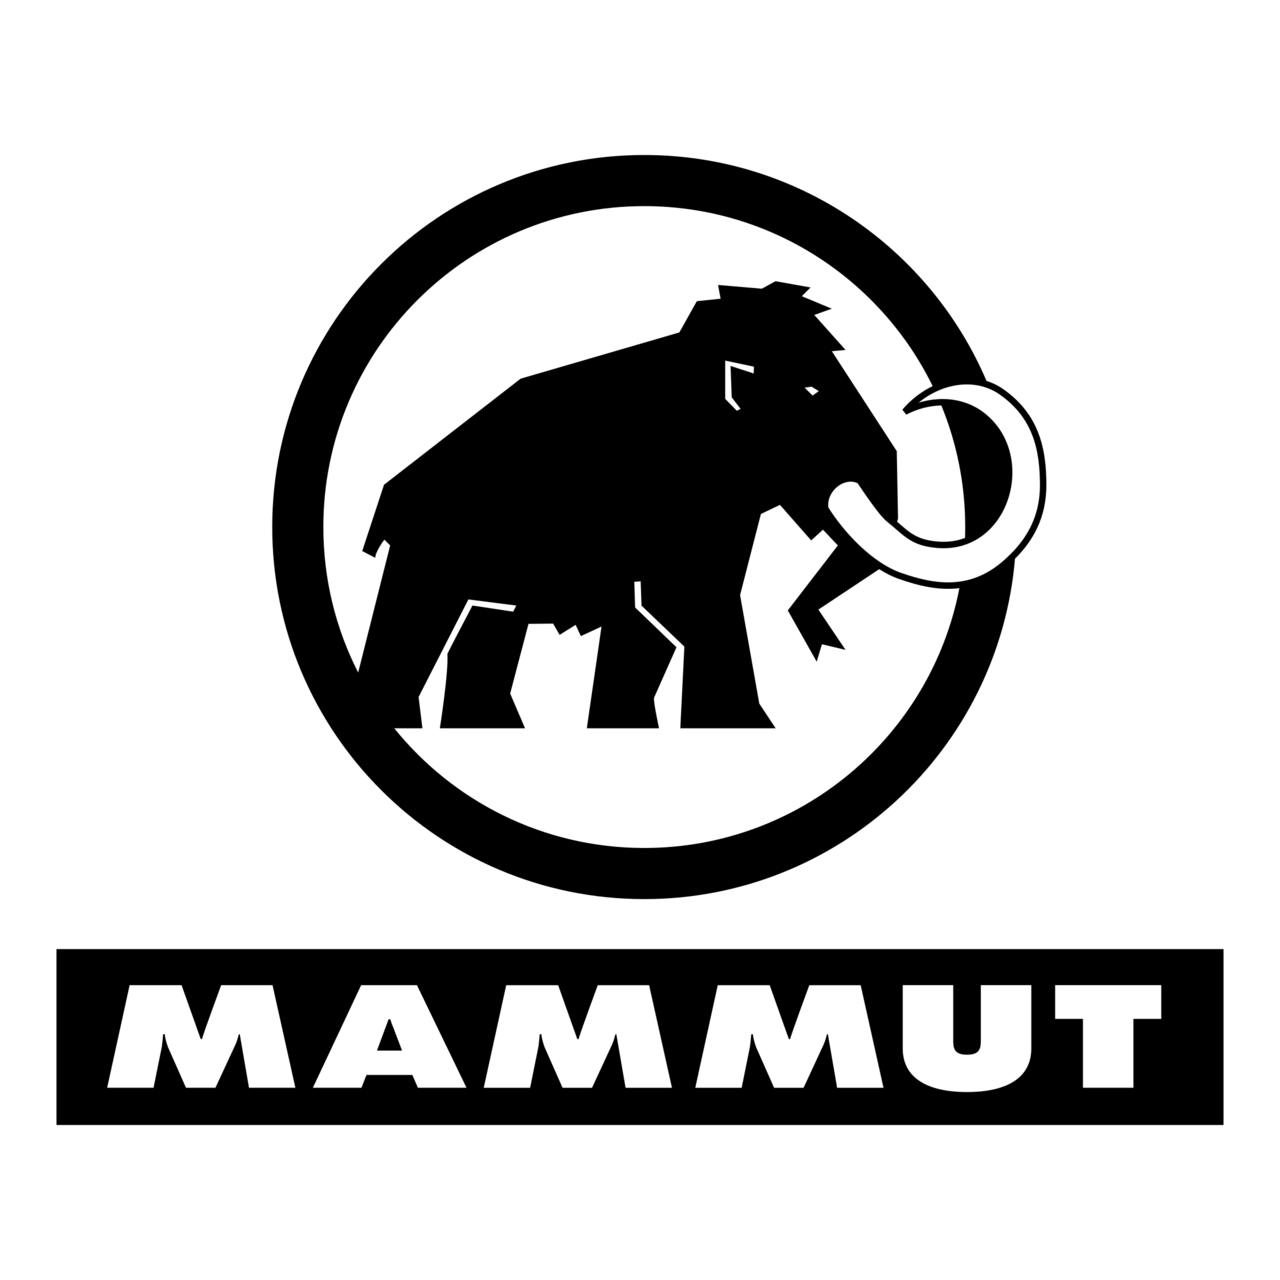 mammut-logo-black-and-white